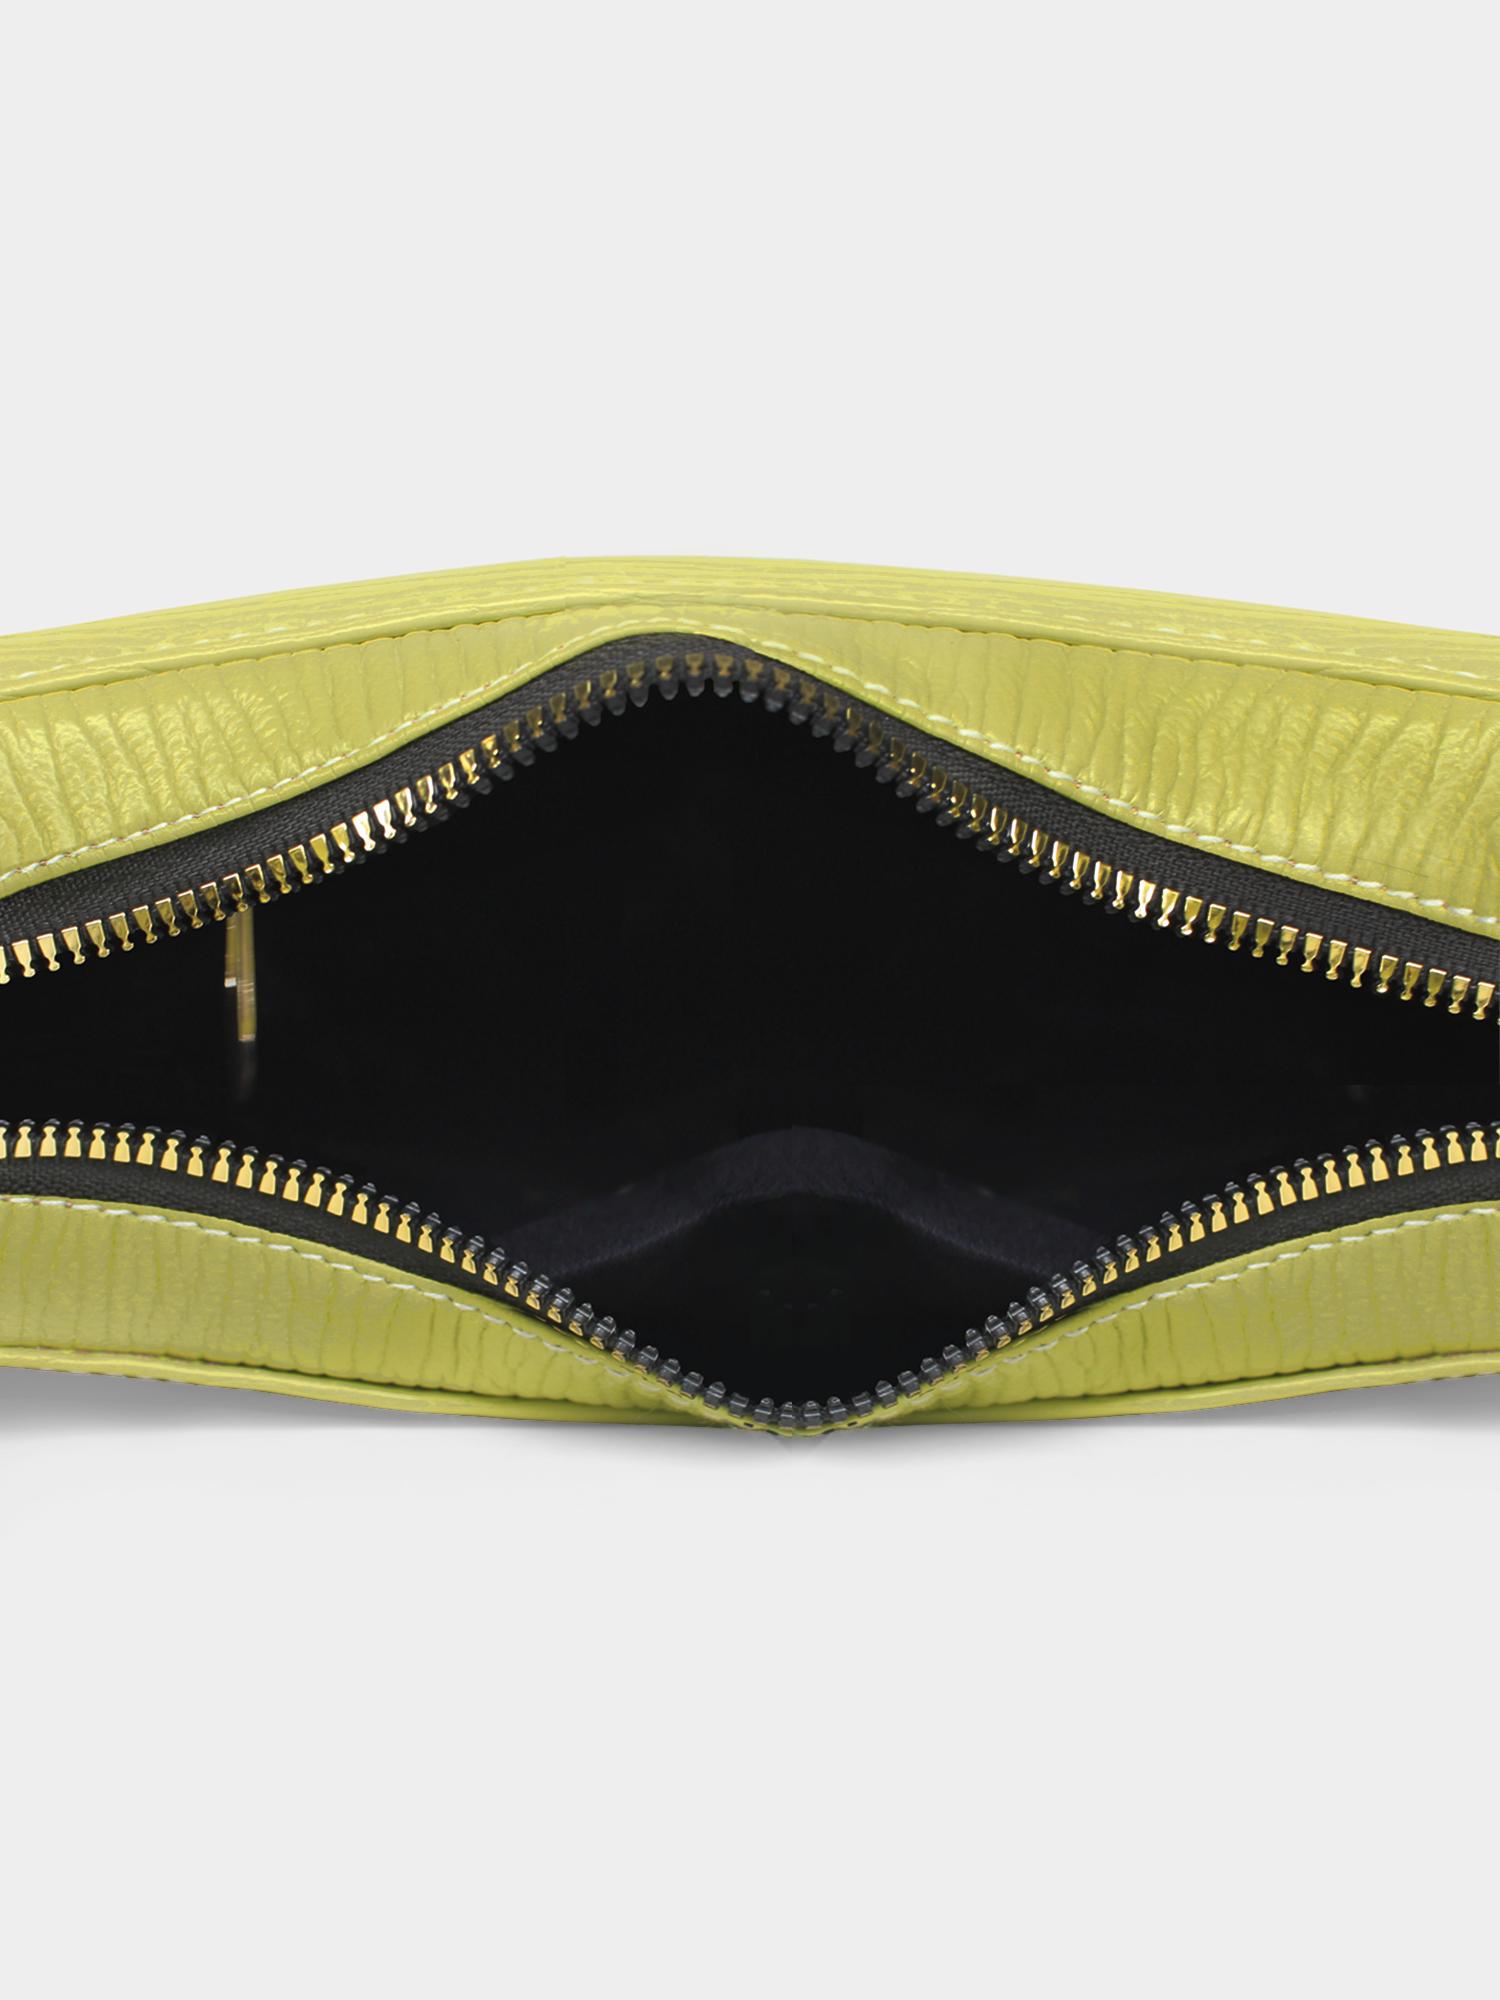 Unzipped Multi Color Cheetah by New Vintage Handbags